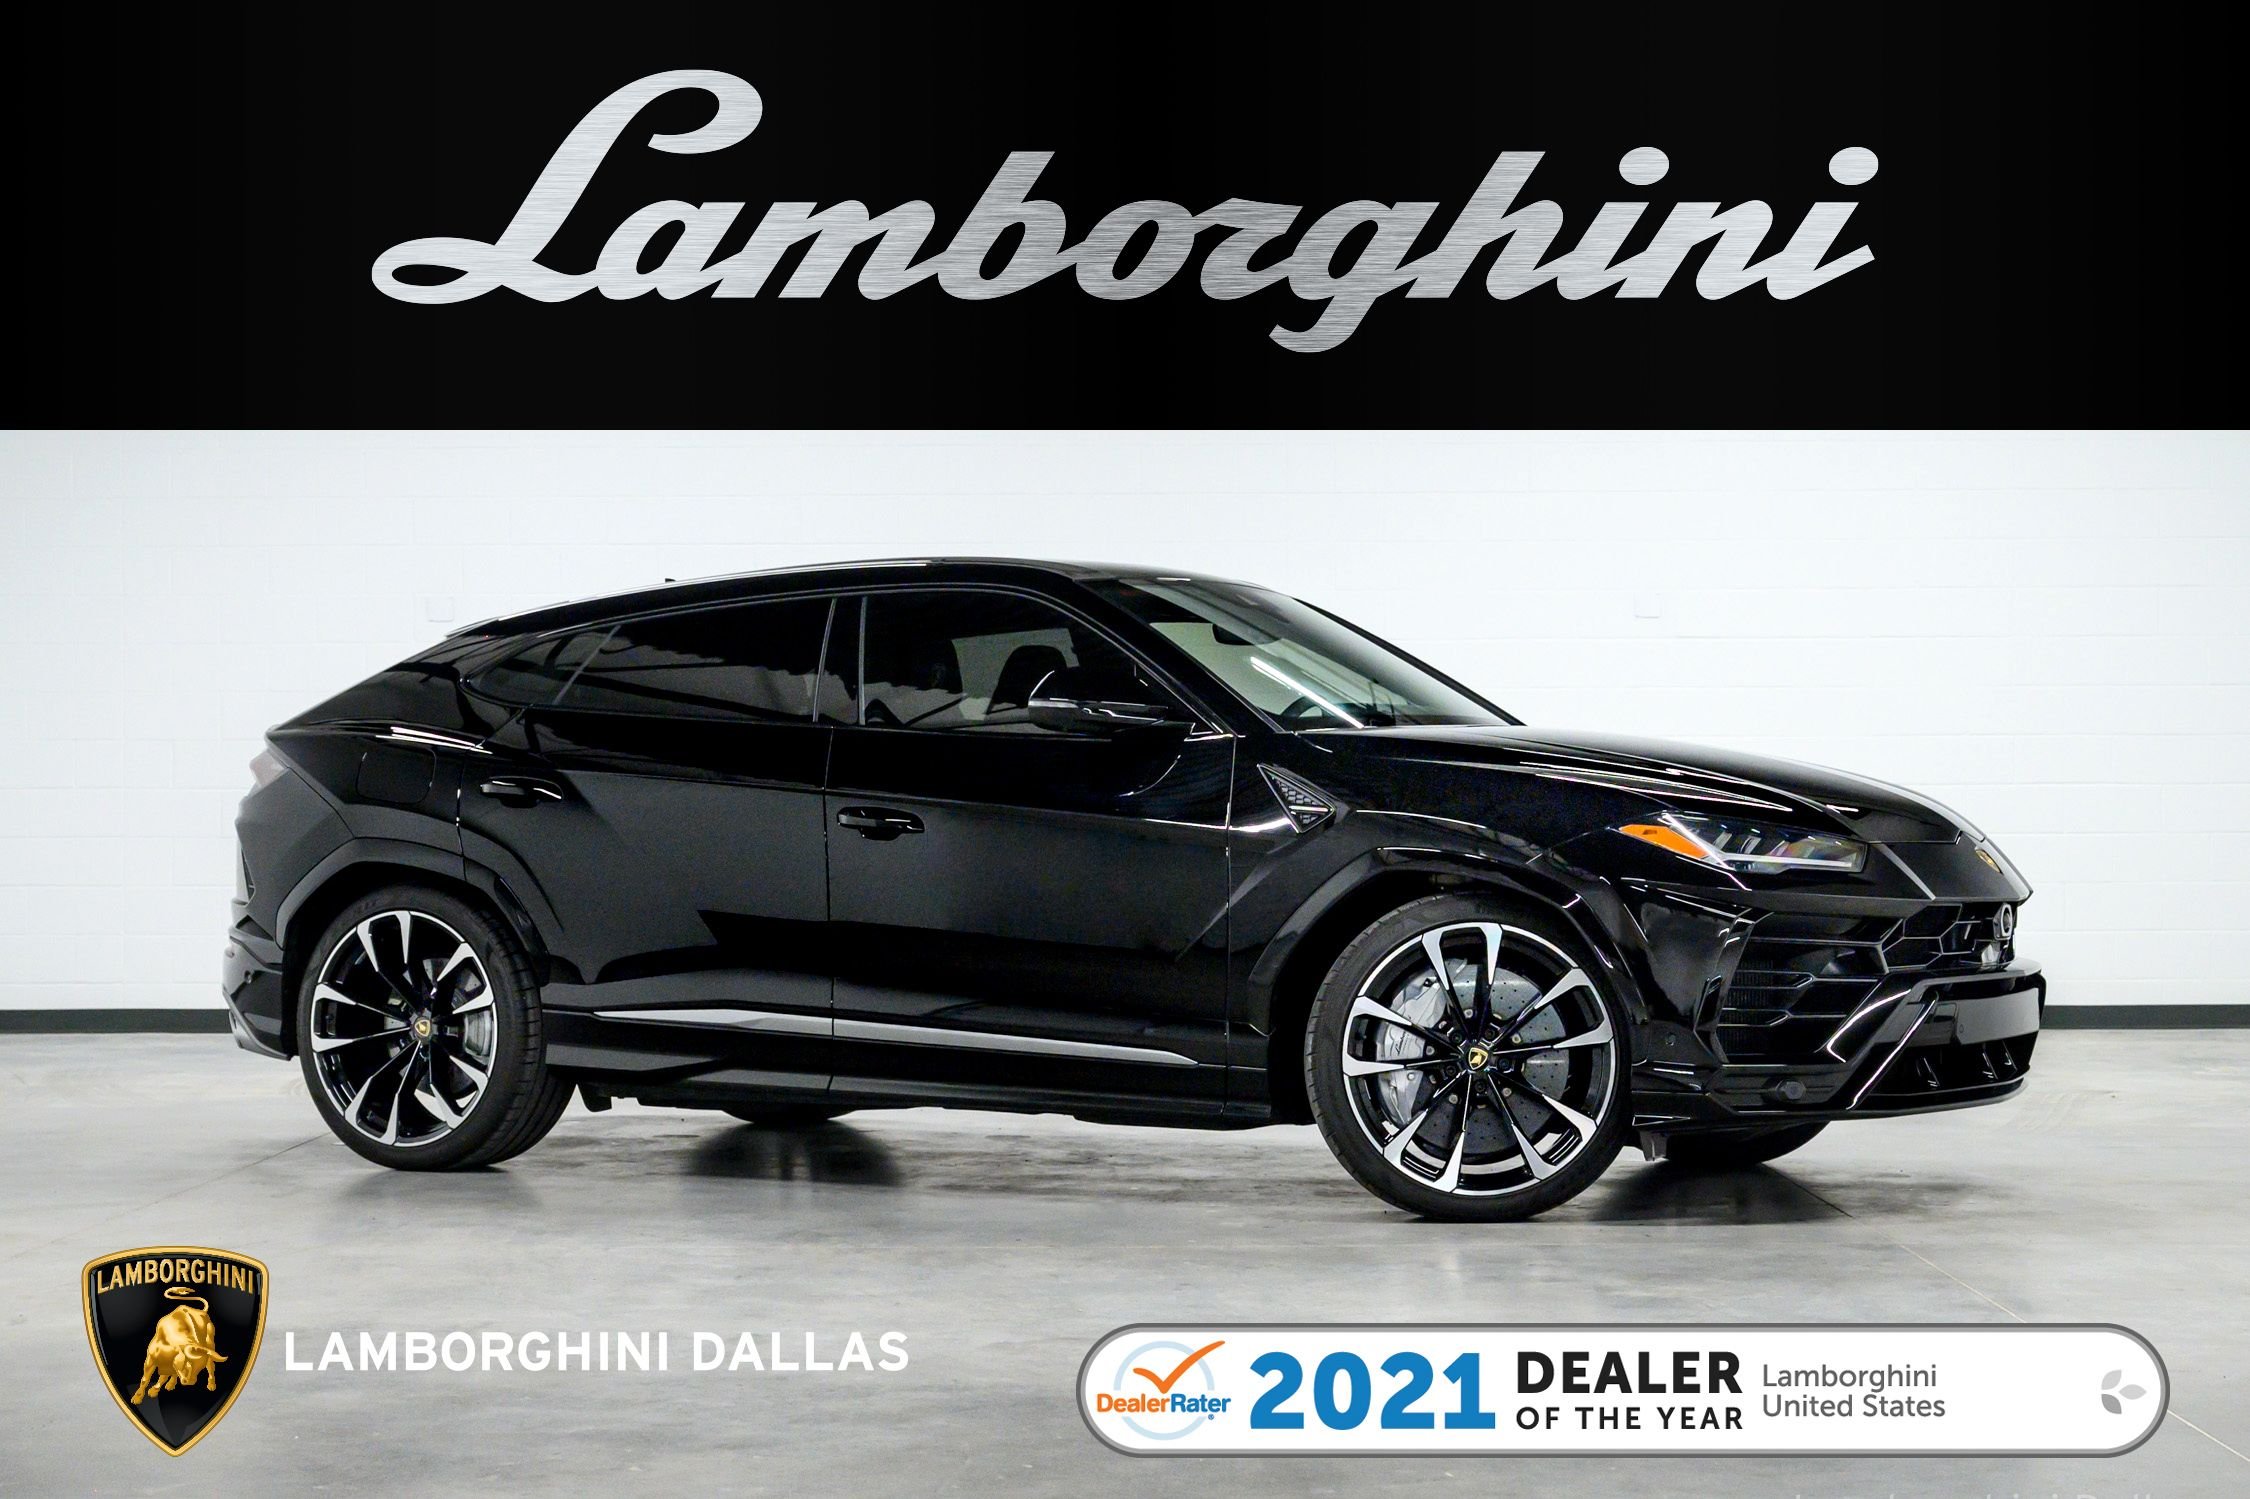 Used 2021 Lamborghini Urus For Sale Richardson,TX | Stock 